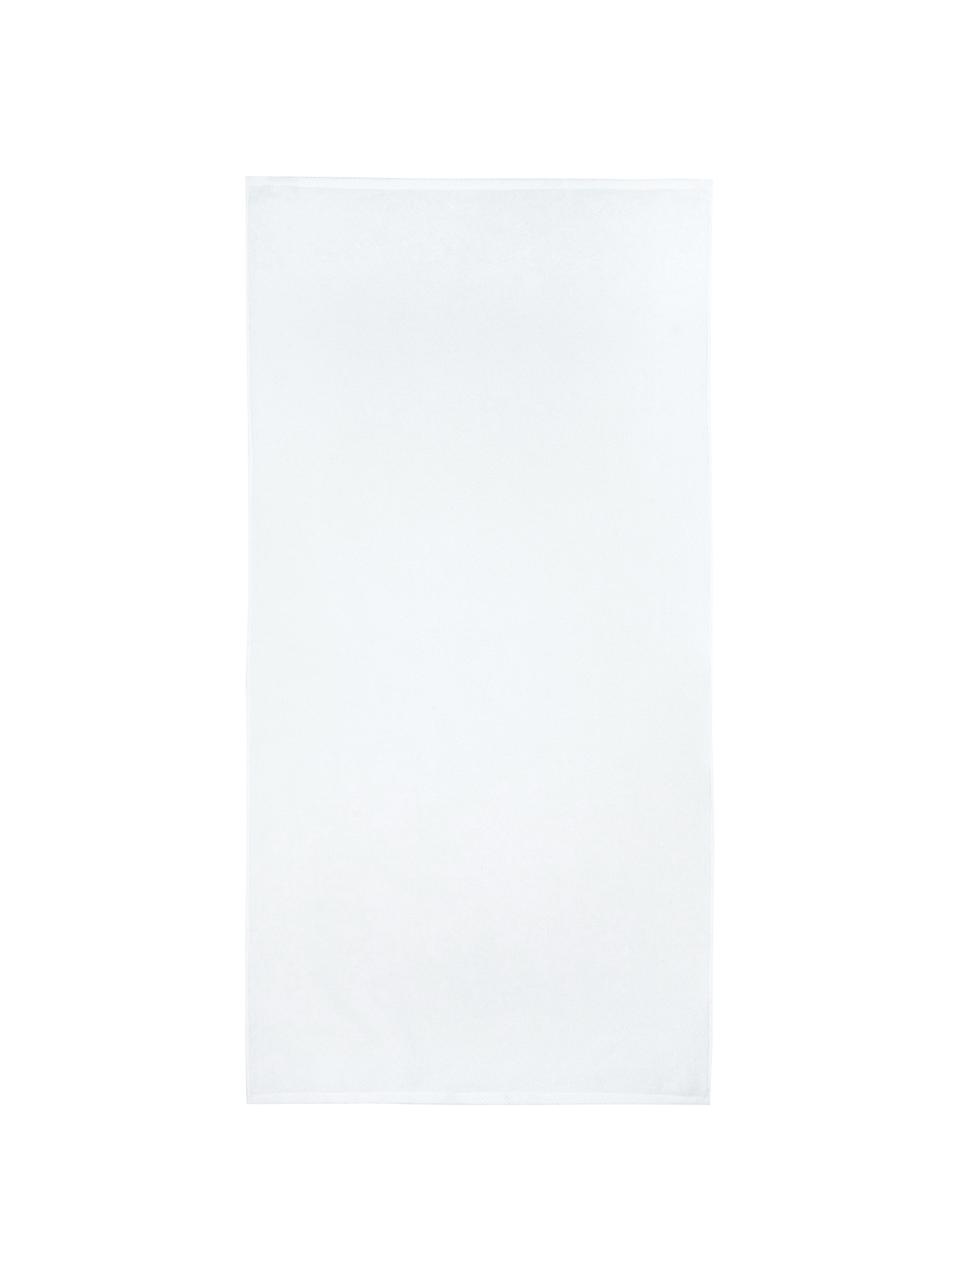 Jednobarevný ručník Comfort, různé velikosti, Bílá, Osuška, Š 100 cm, D 150 cm